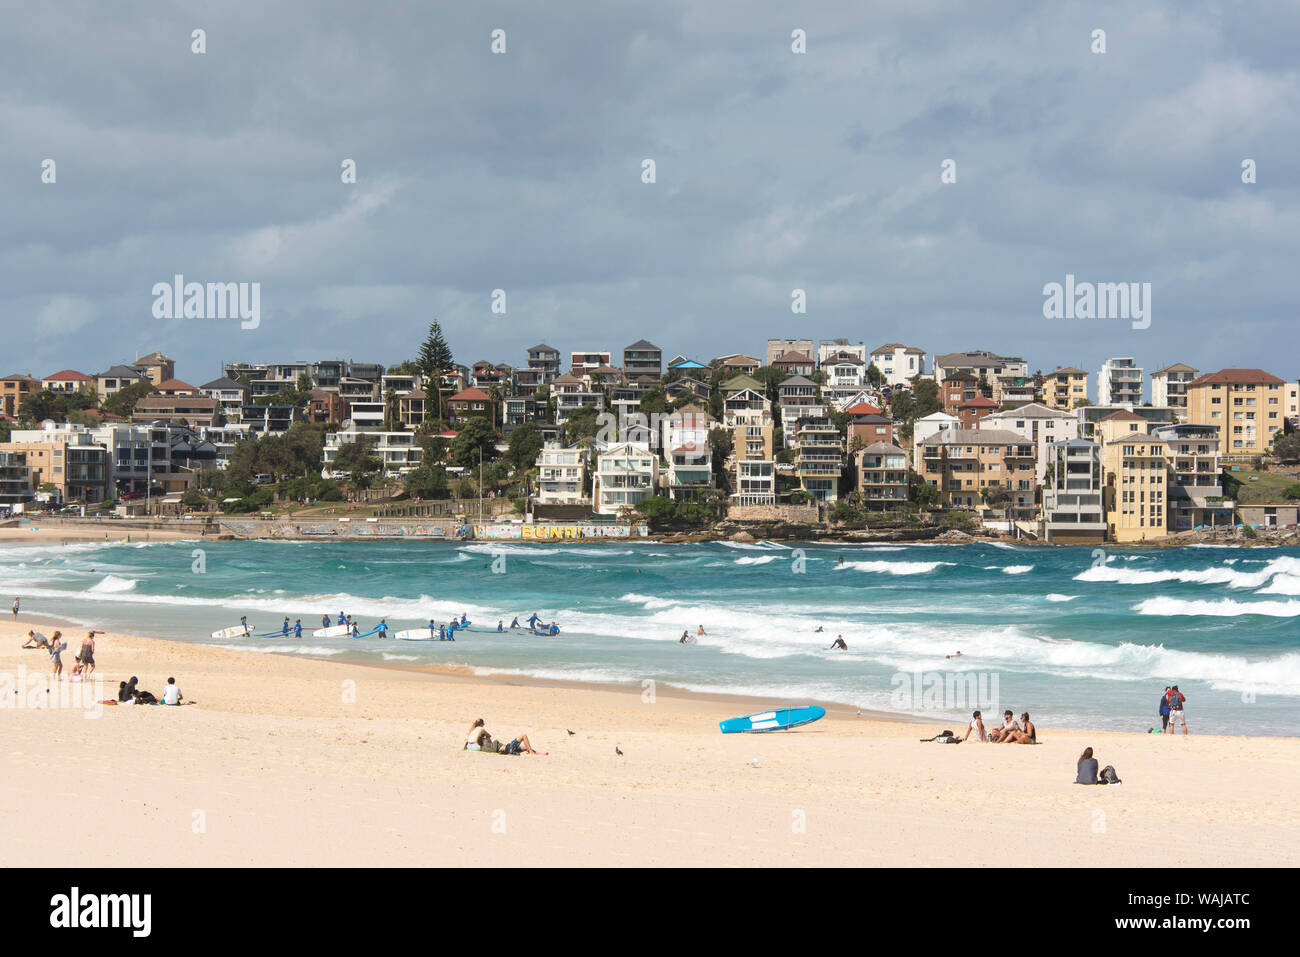 Australia, New South Wales, Sydney. Bondi Beach surfing class Stock Photo